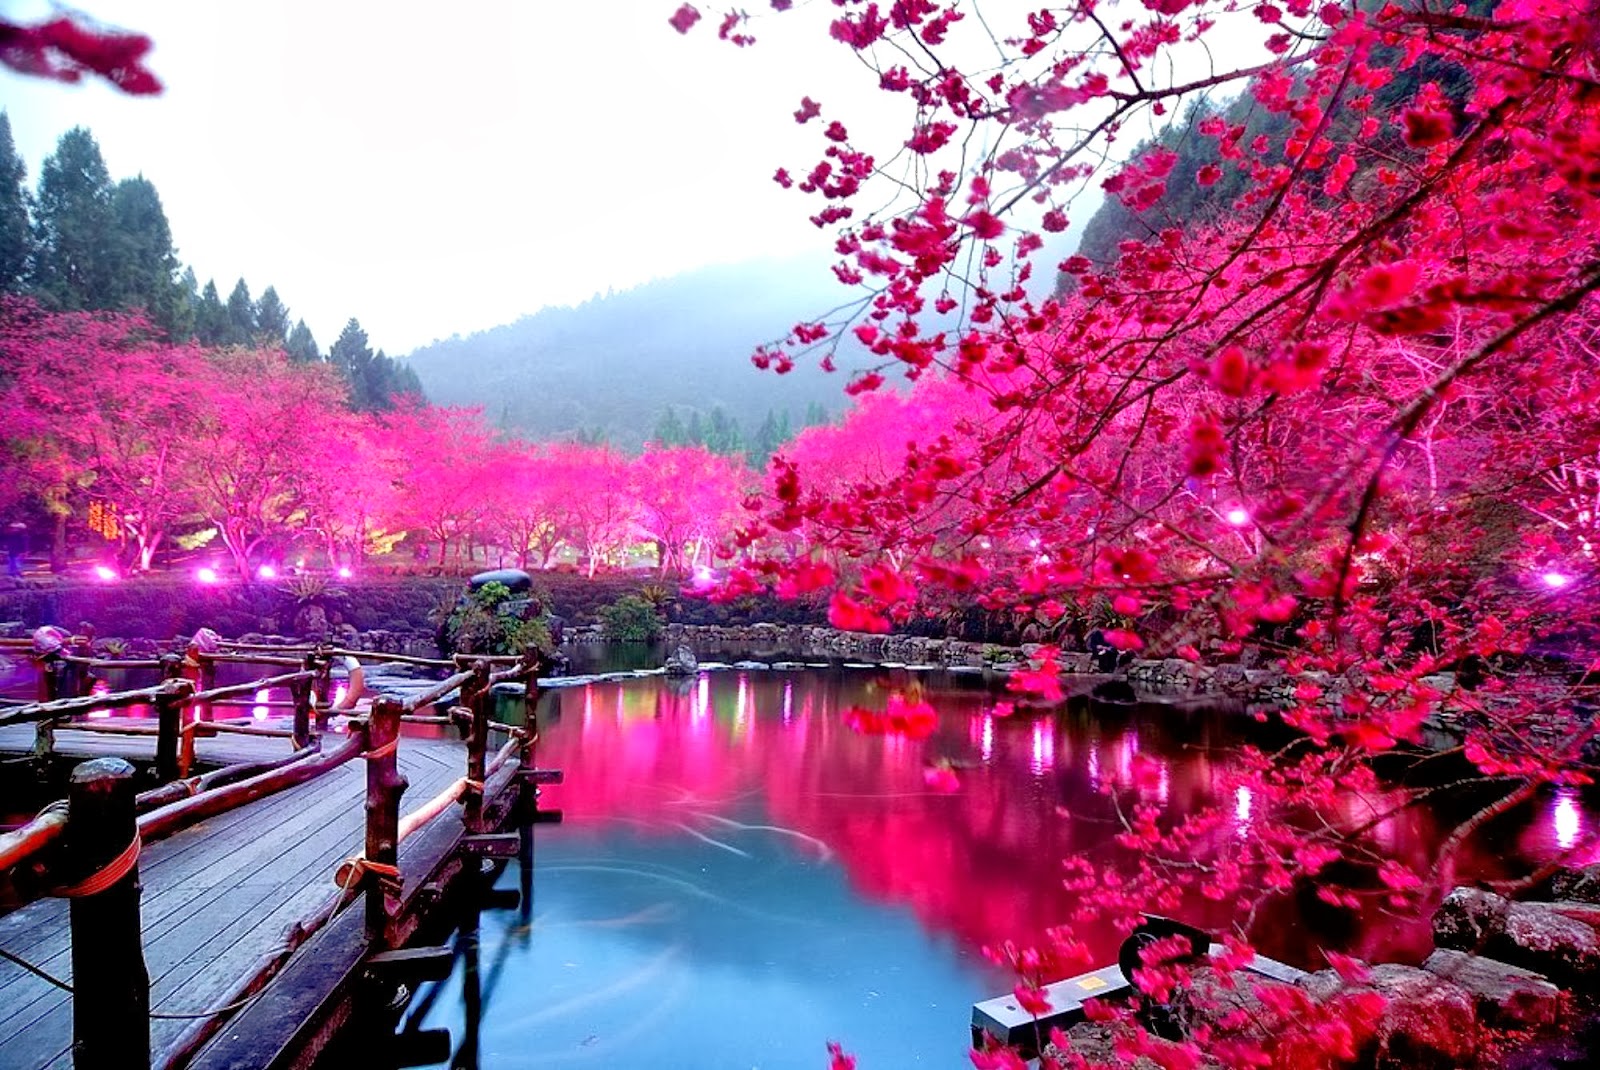 Cherry Blossoms Festival, Japan: | Shah Nasir Travel